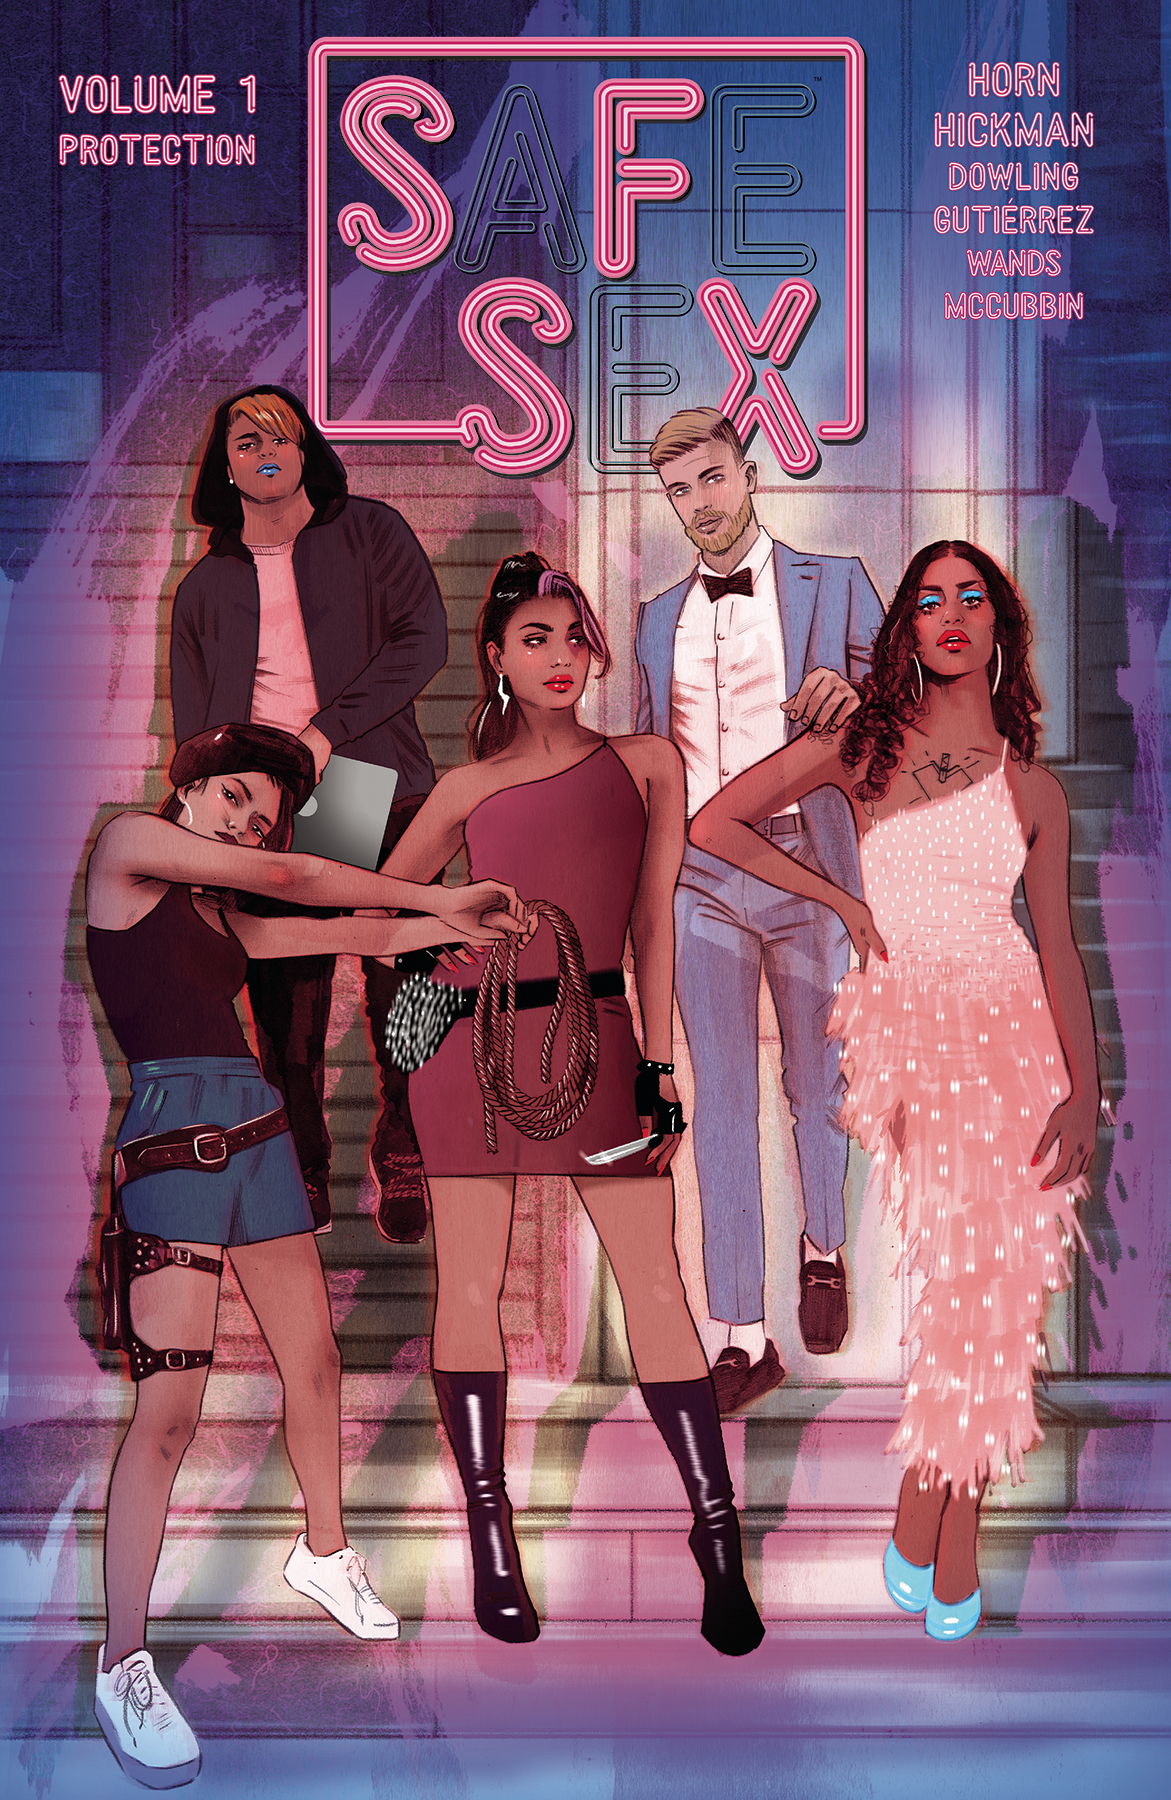 SFSX (Safe Sex) Graphic Novel Volume 1 Protection (Mature)